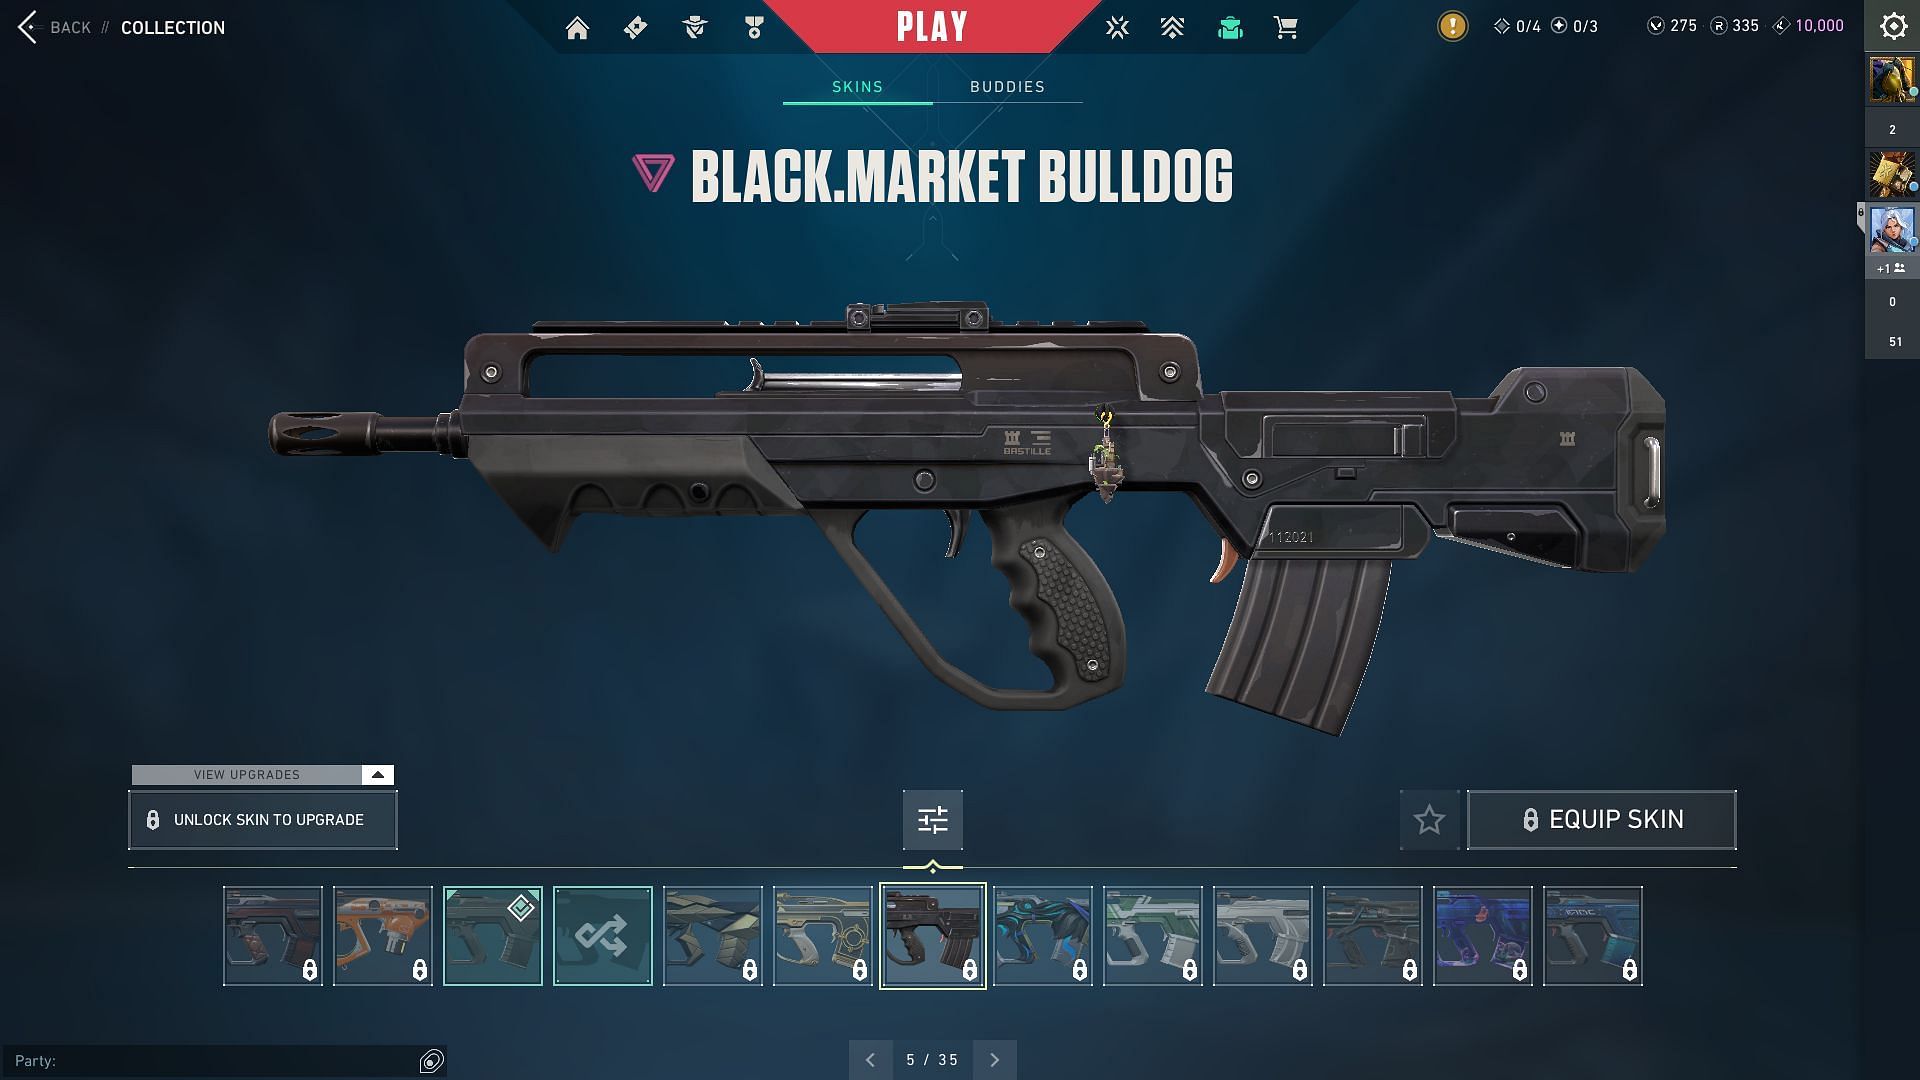 Black.Market Bulldog (Image via Sportskeeda and Riot Games)